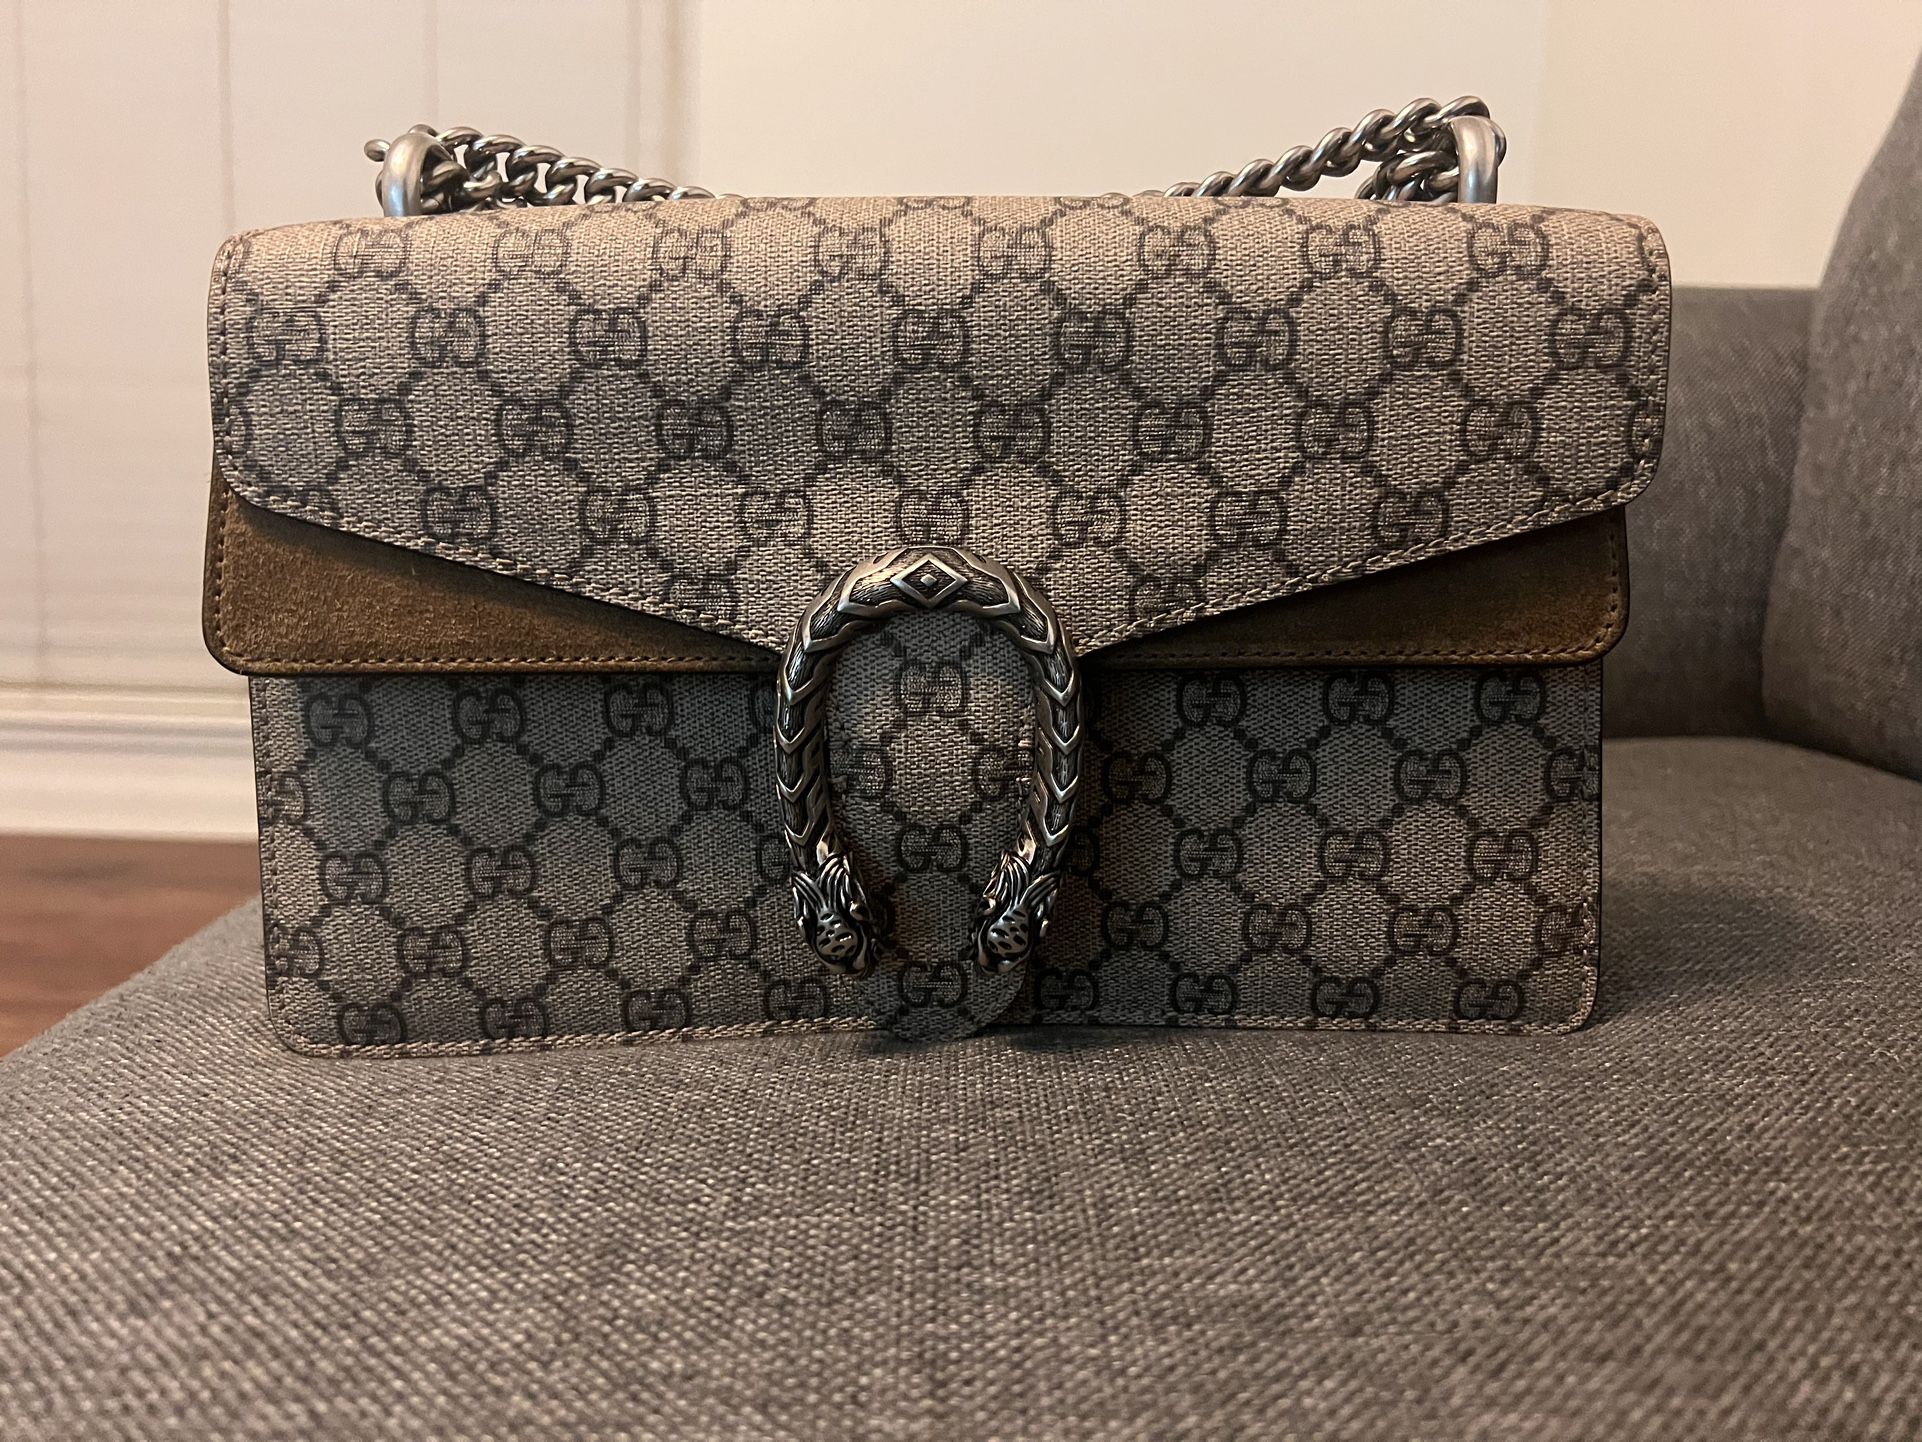  Gucci Dionysus Small GG Shoulder Bag Natural 